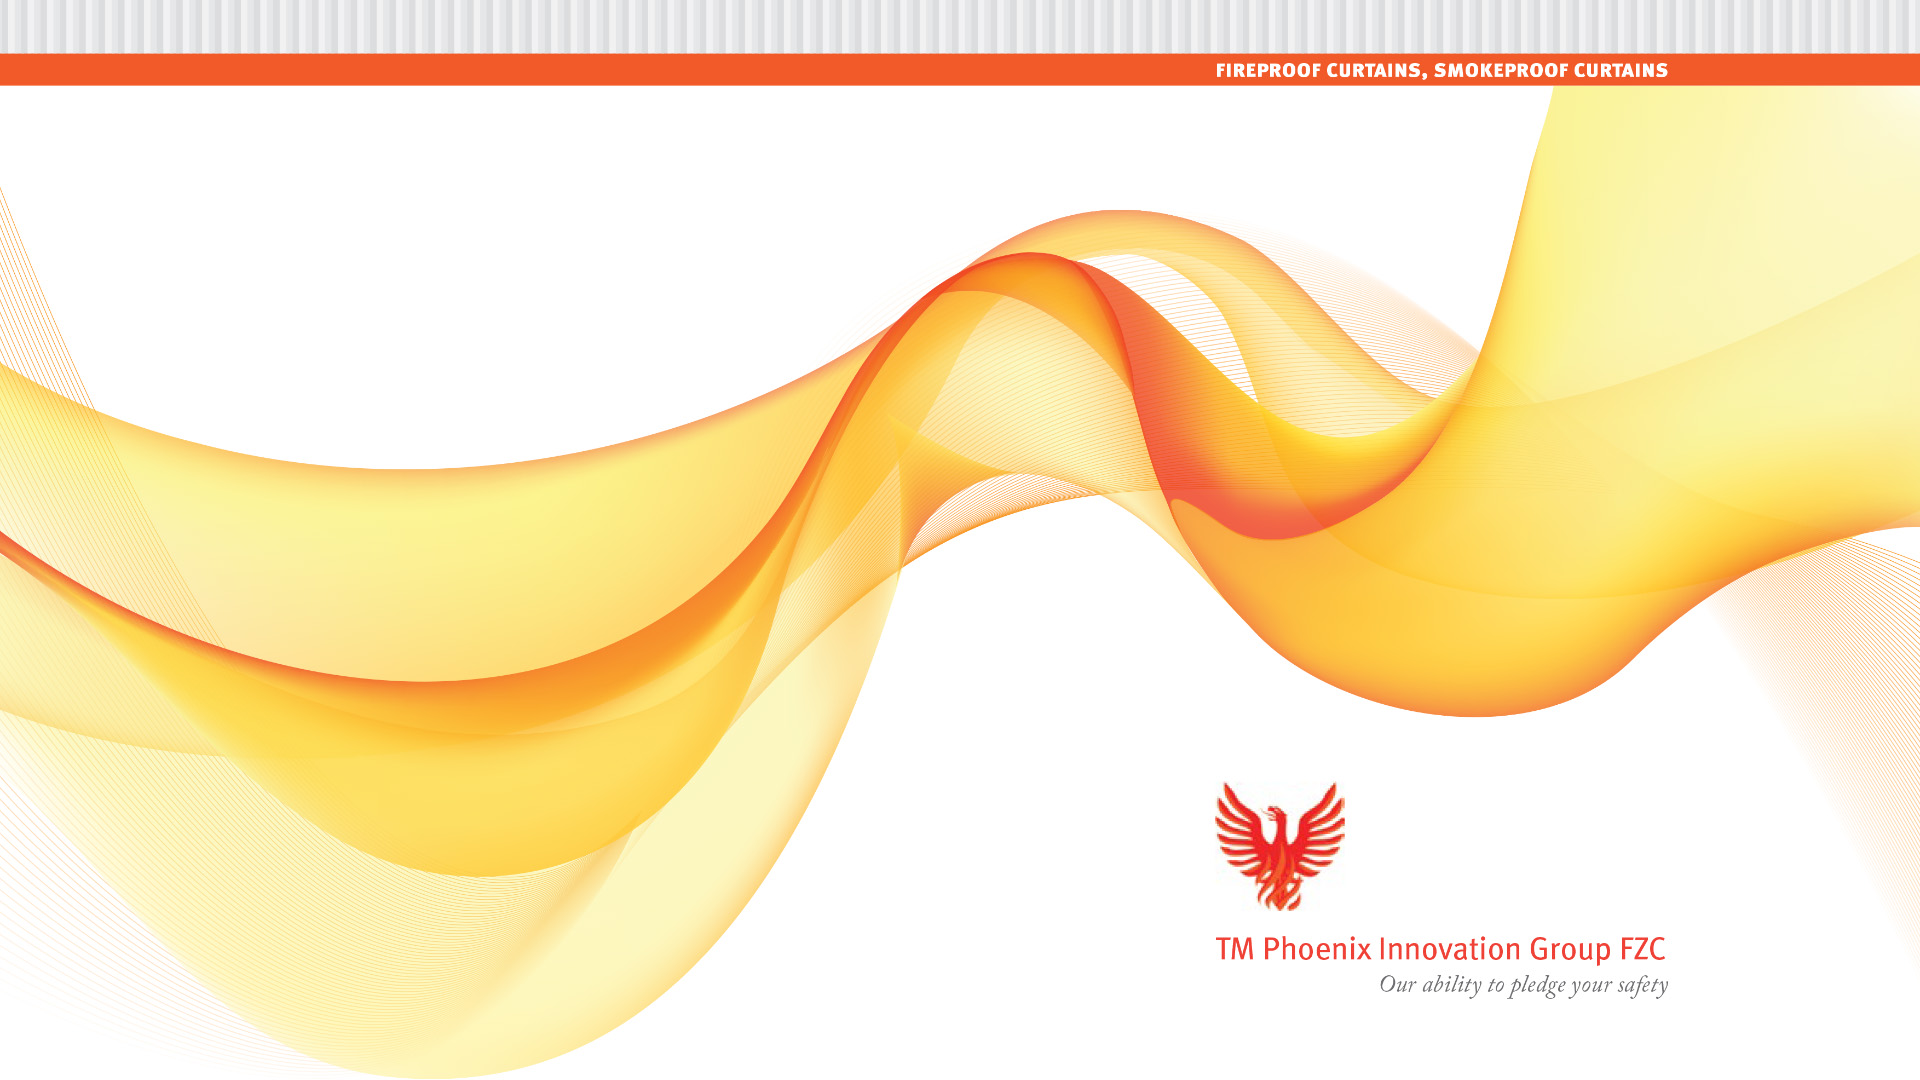 Phoenix Innovation Group